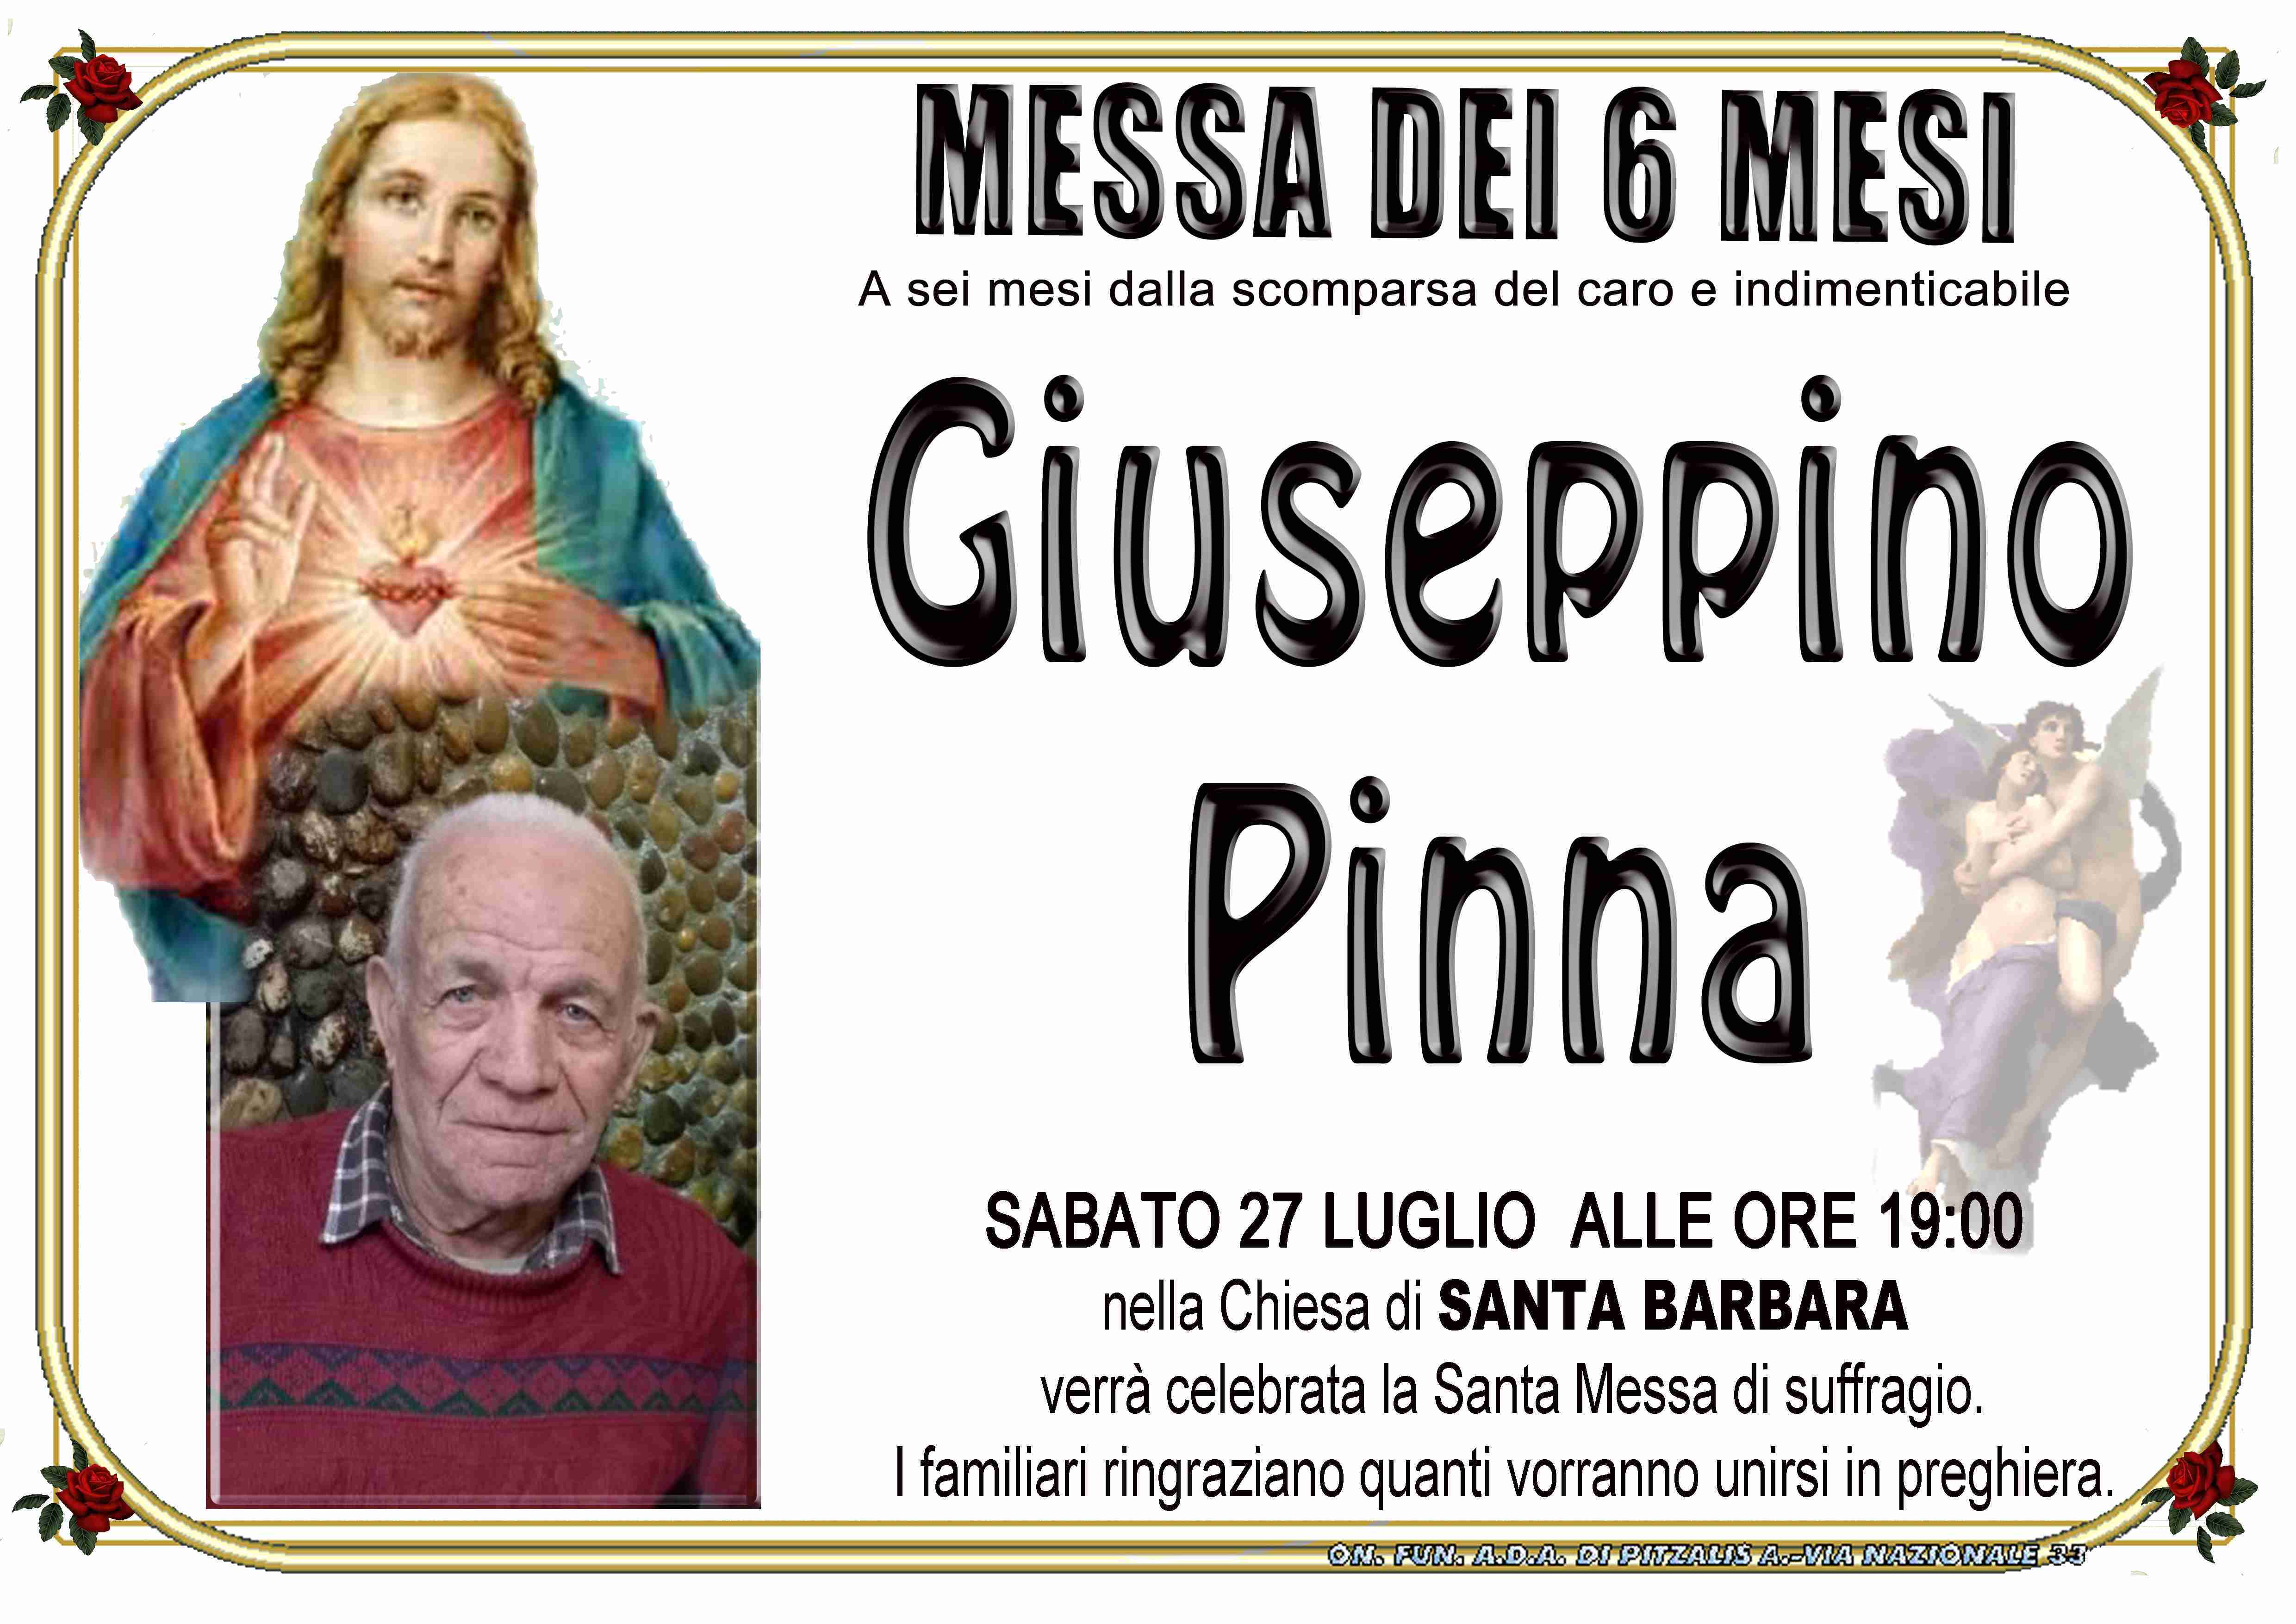 Giuseppino Pinna